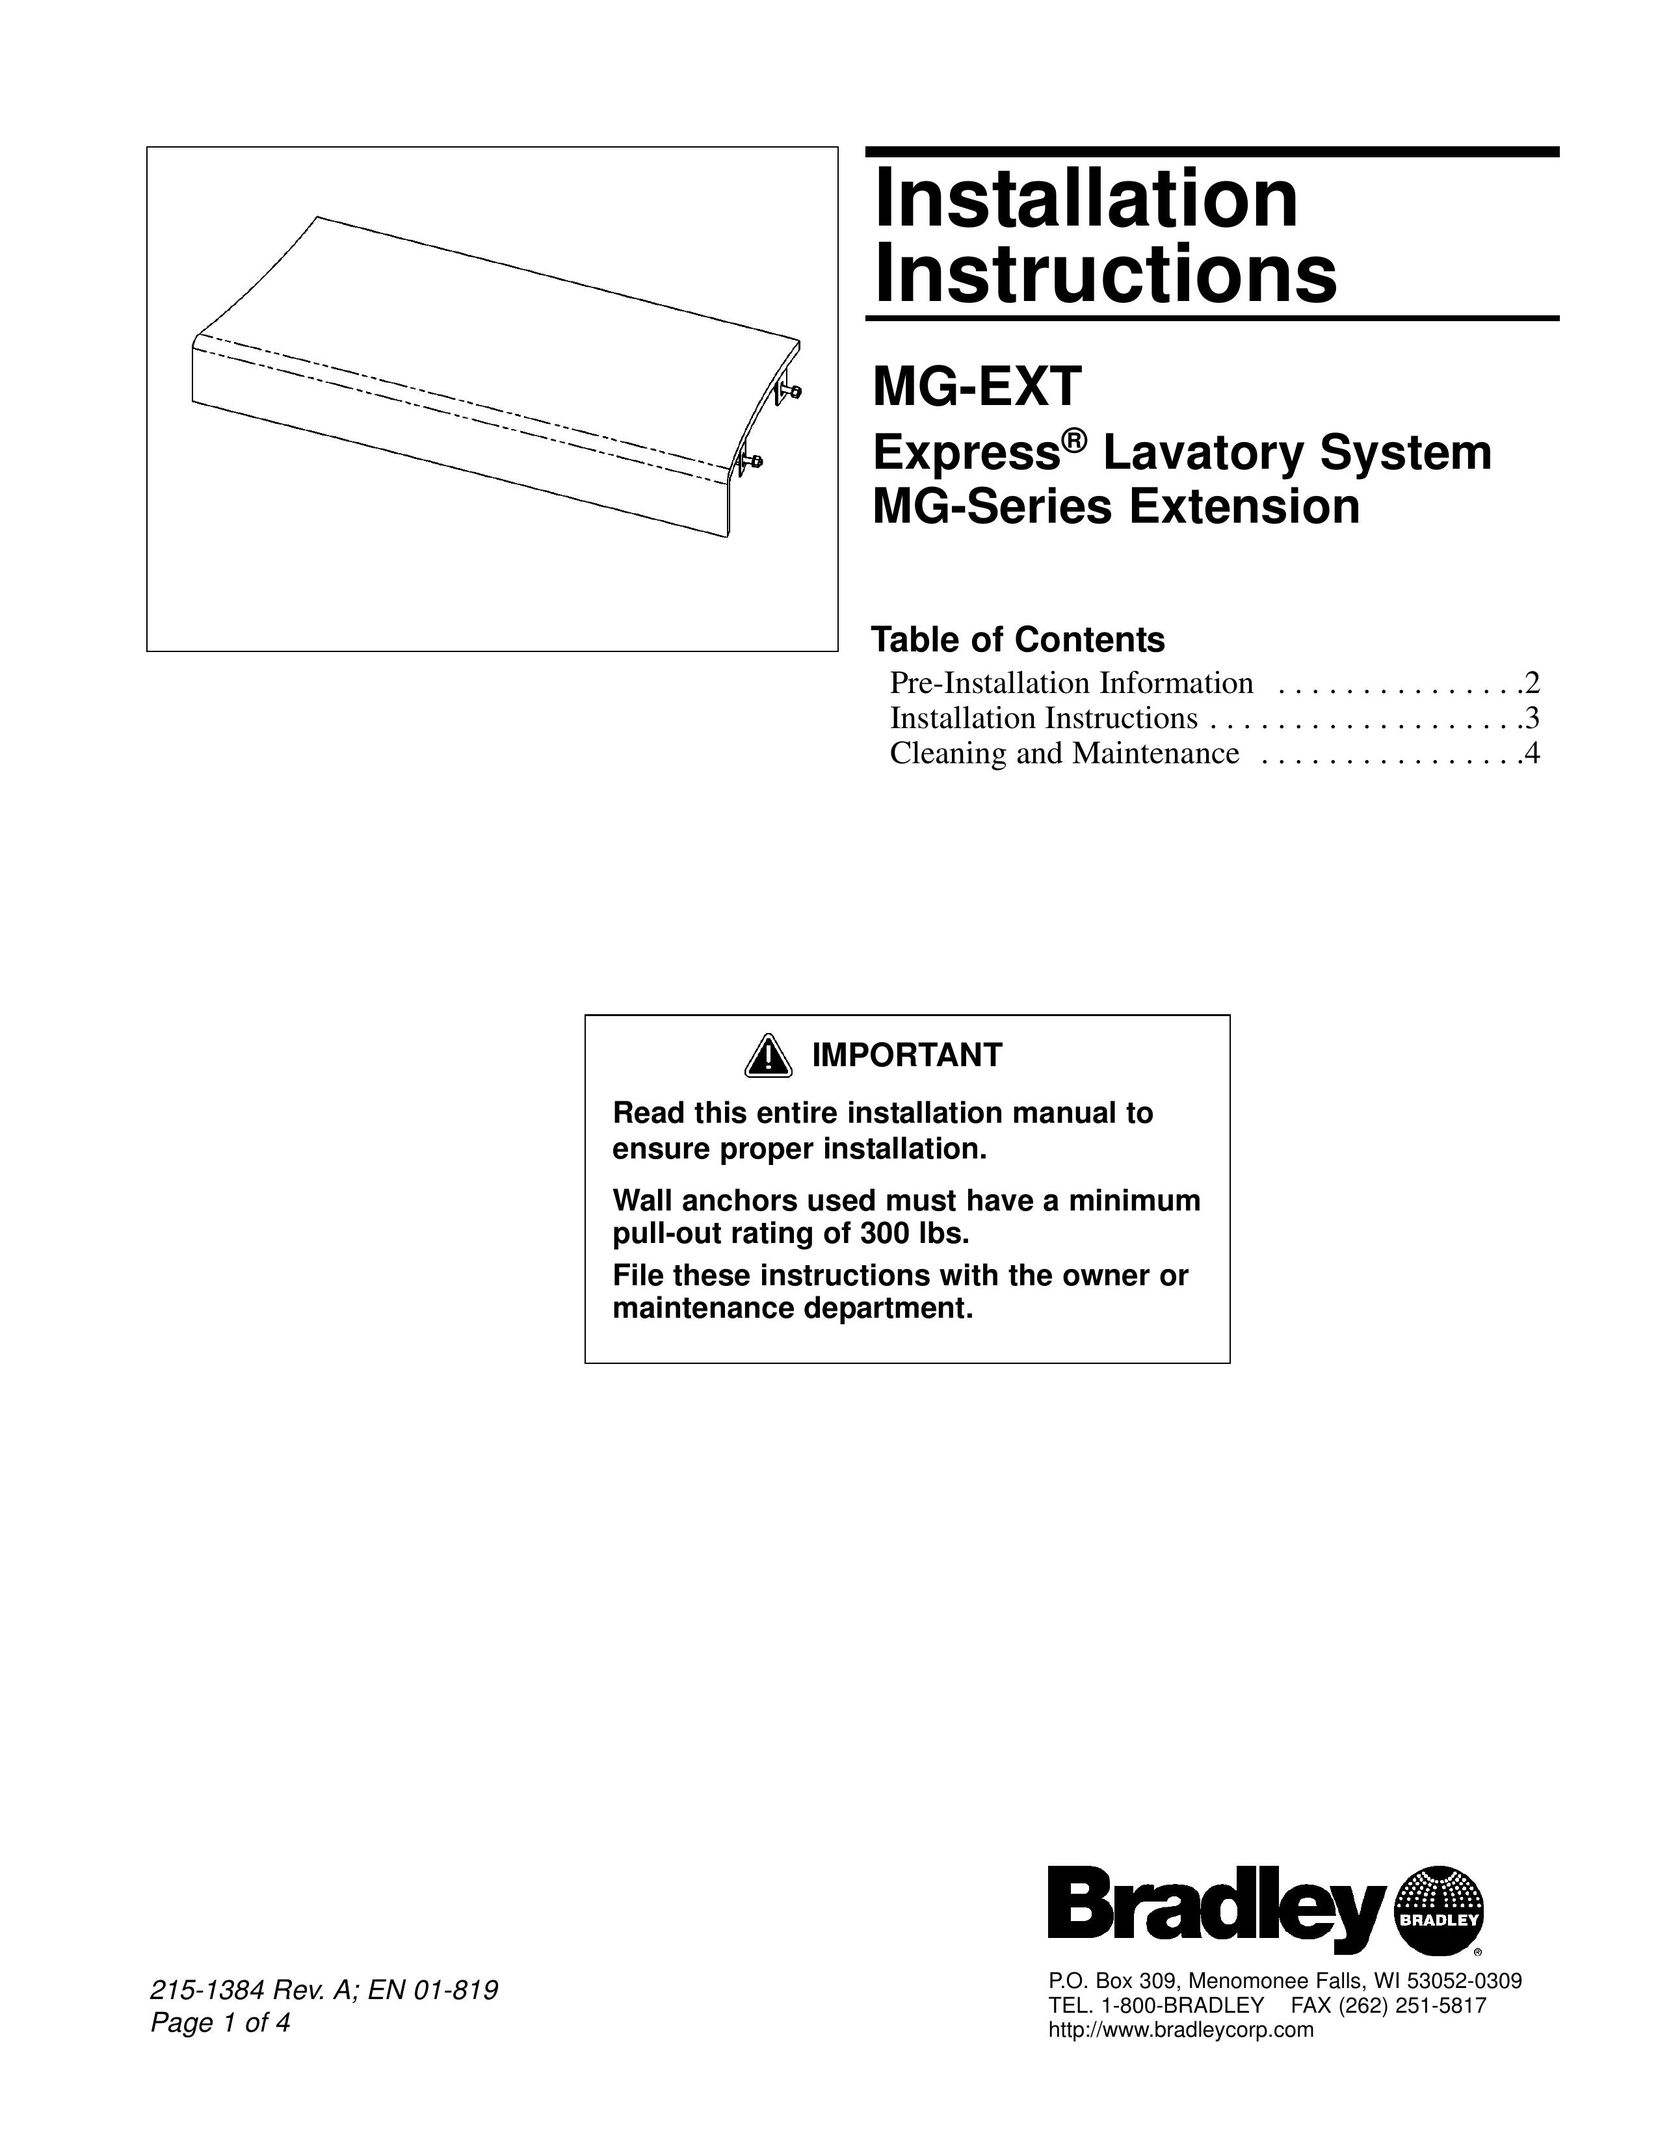 Bradley Smoker MG-EXT Plumbing Product User Manual